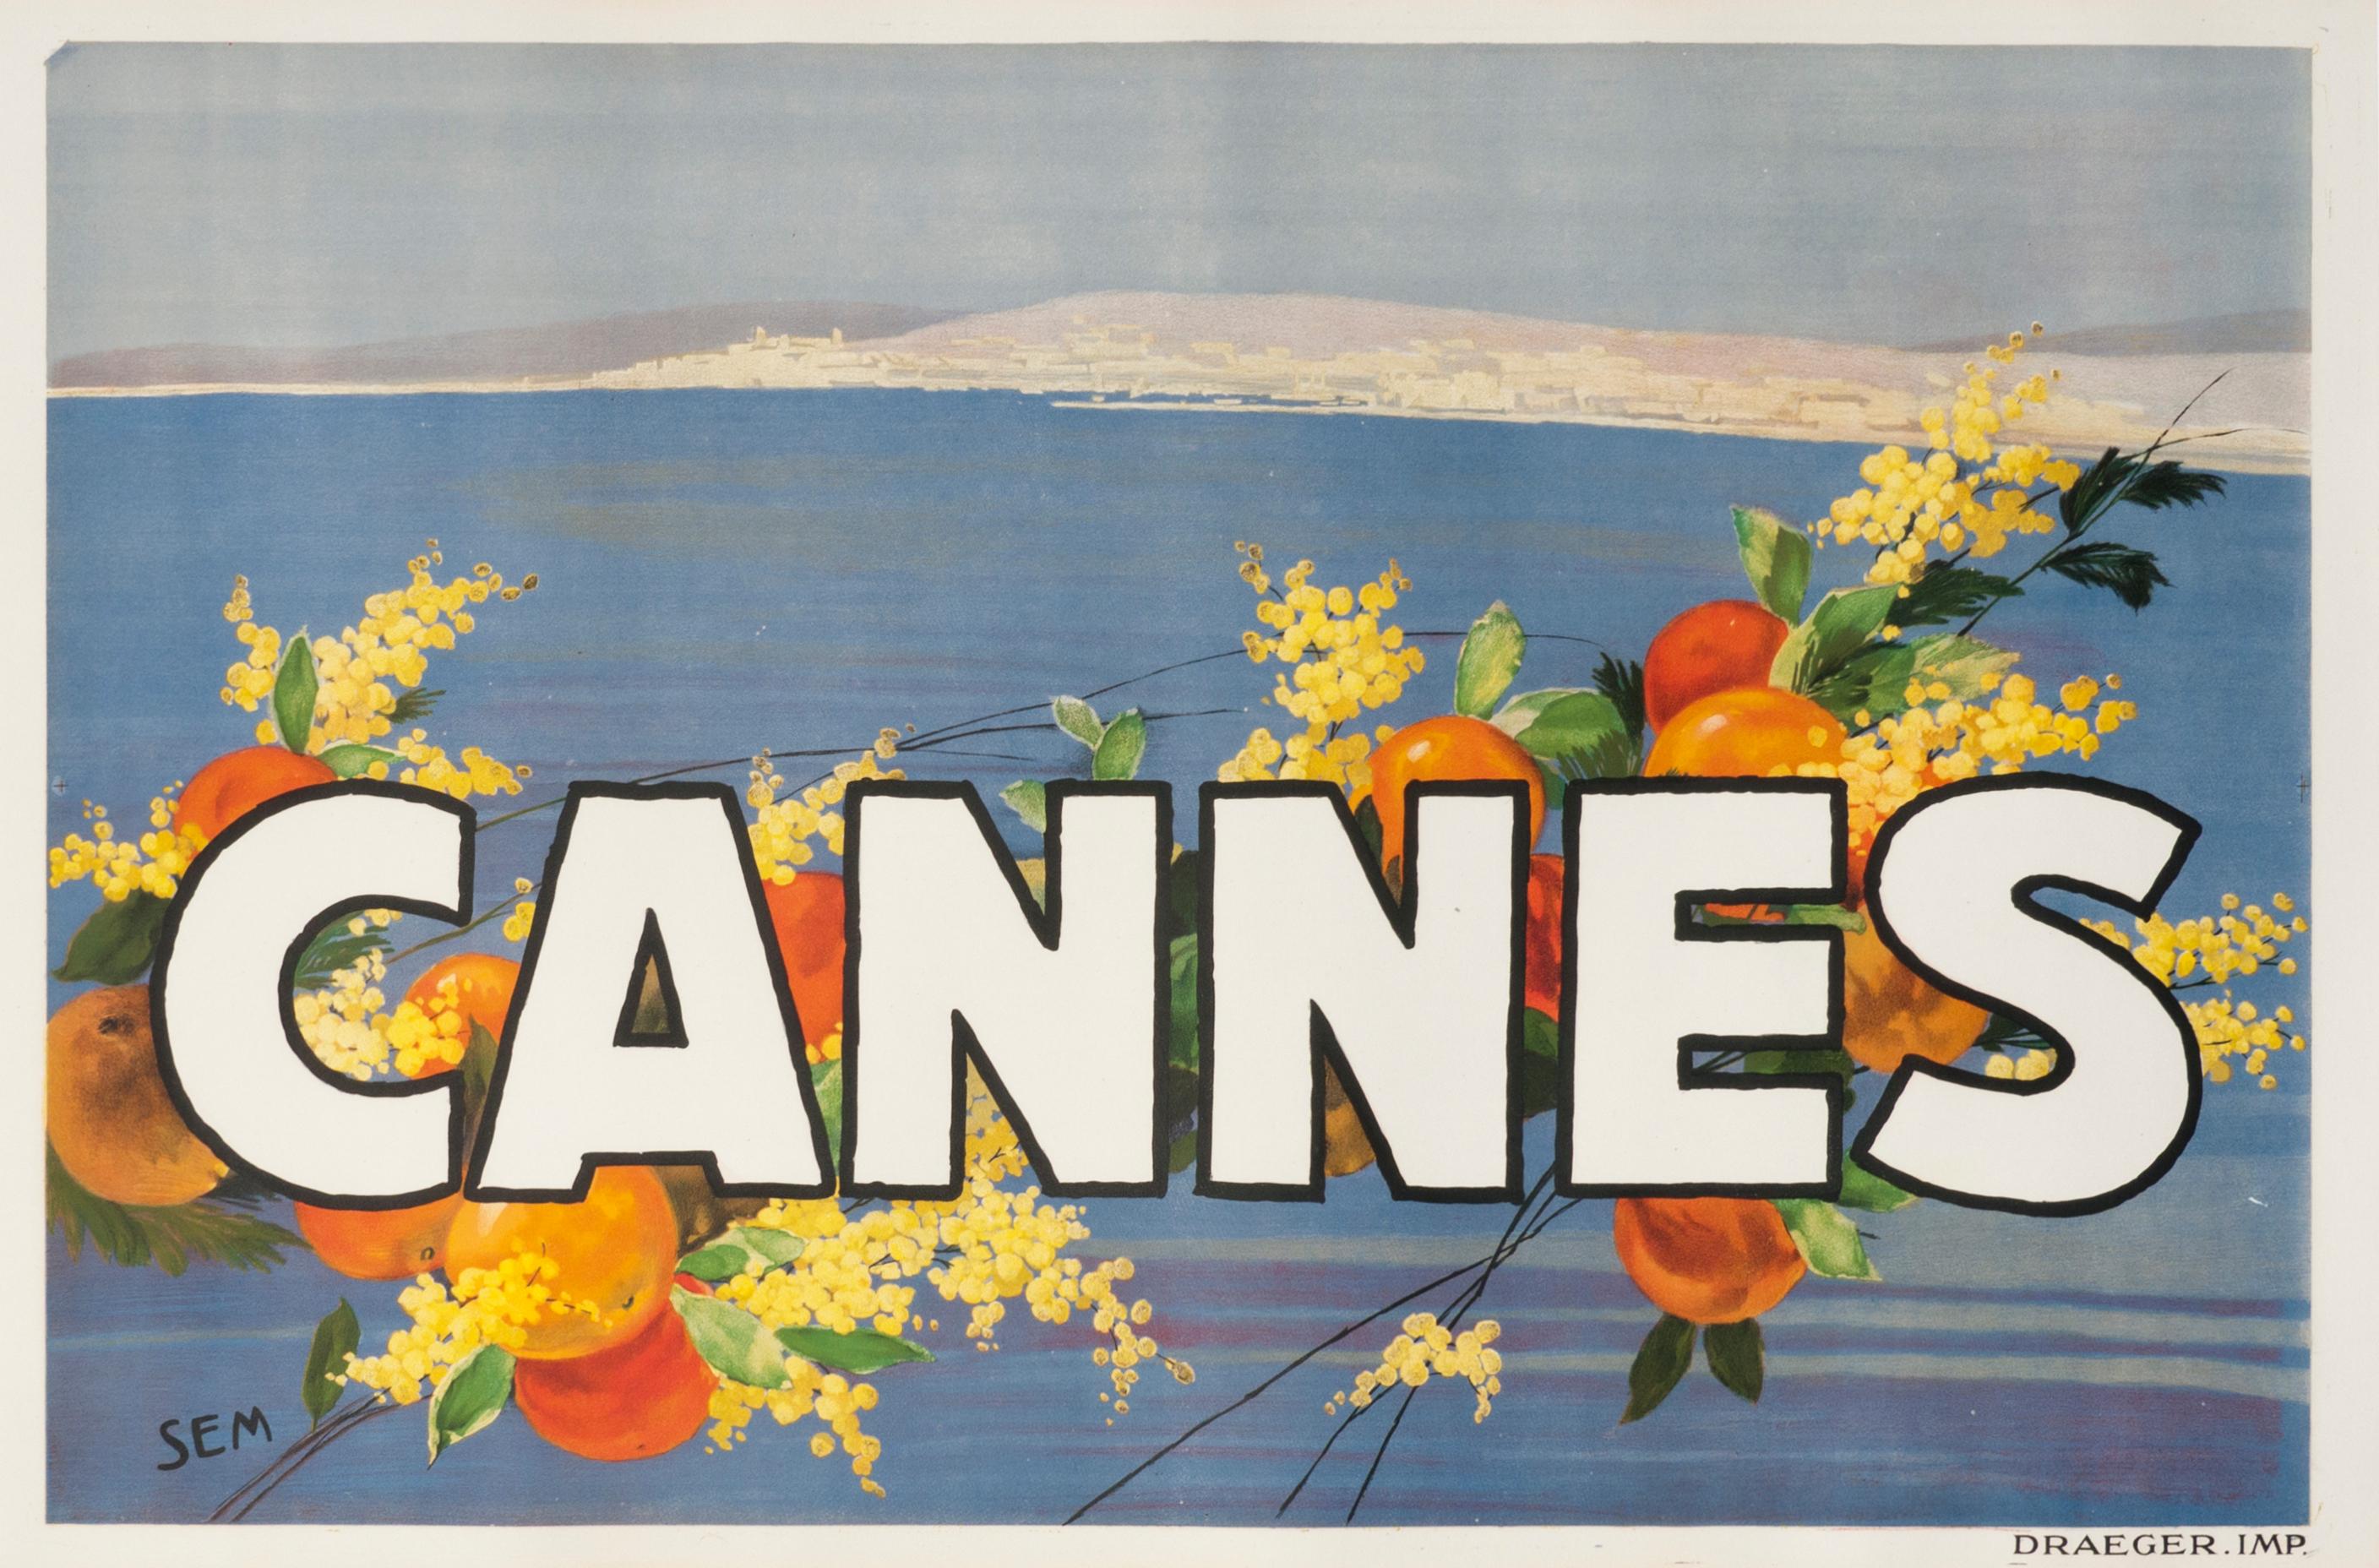 "Cannes" Original Vintage French Travel Poster 1930 - Print by SEM (George Goursat)